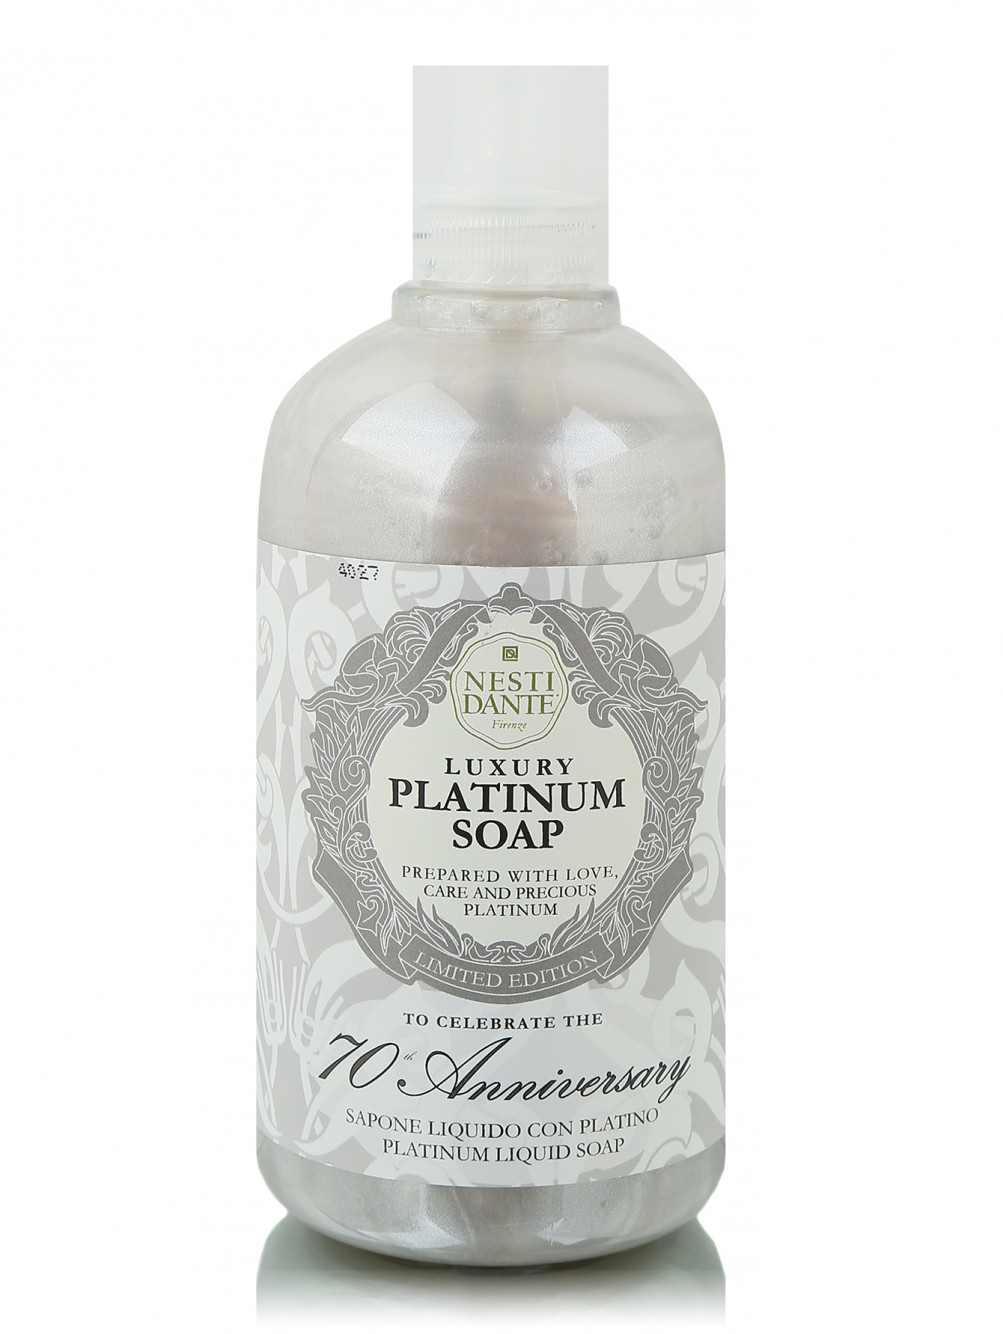 Жидкое мыло Platinum Soap 70-th Anniversary, 500 мл - Общий вид